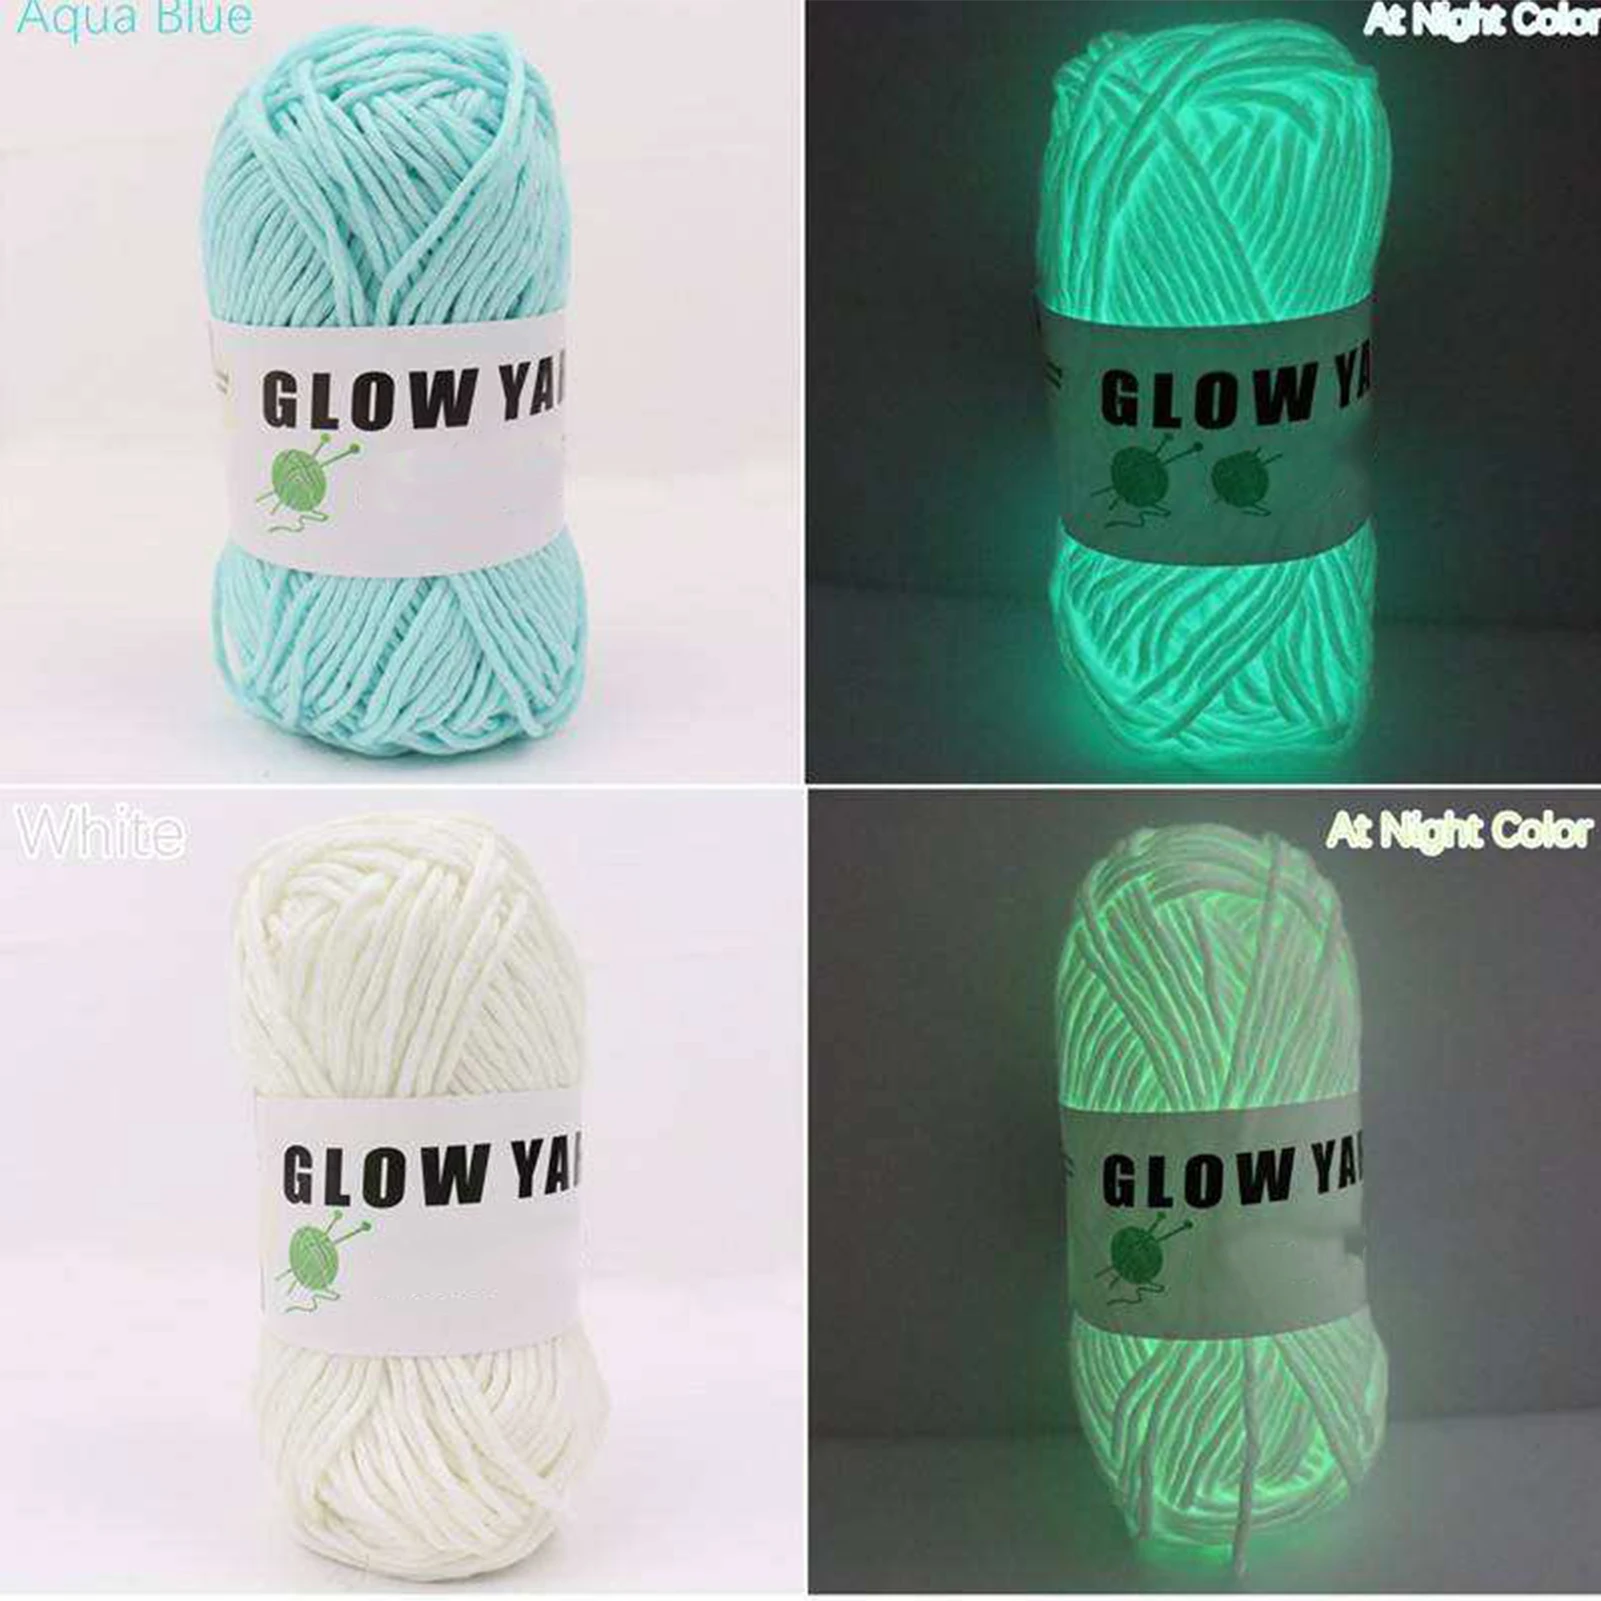 Novel Luminous Yarn Glowing Polyester Yarn for Knitting Braided Crochet DIY Carpet Sweater Keychain Ornament Glow In Dark Yarn